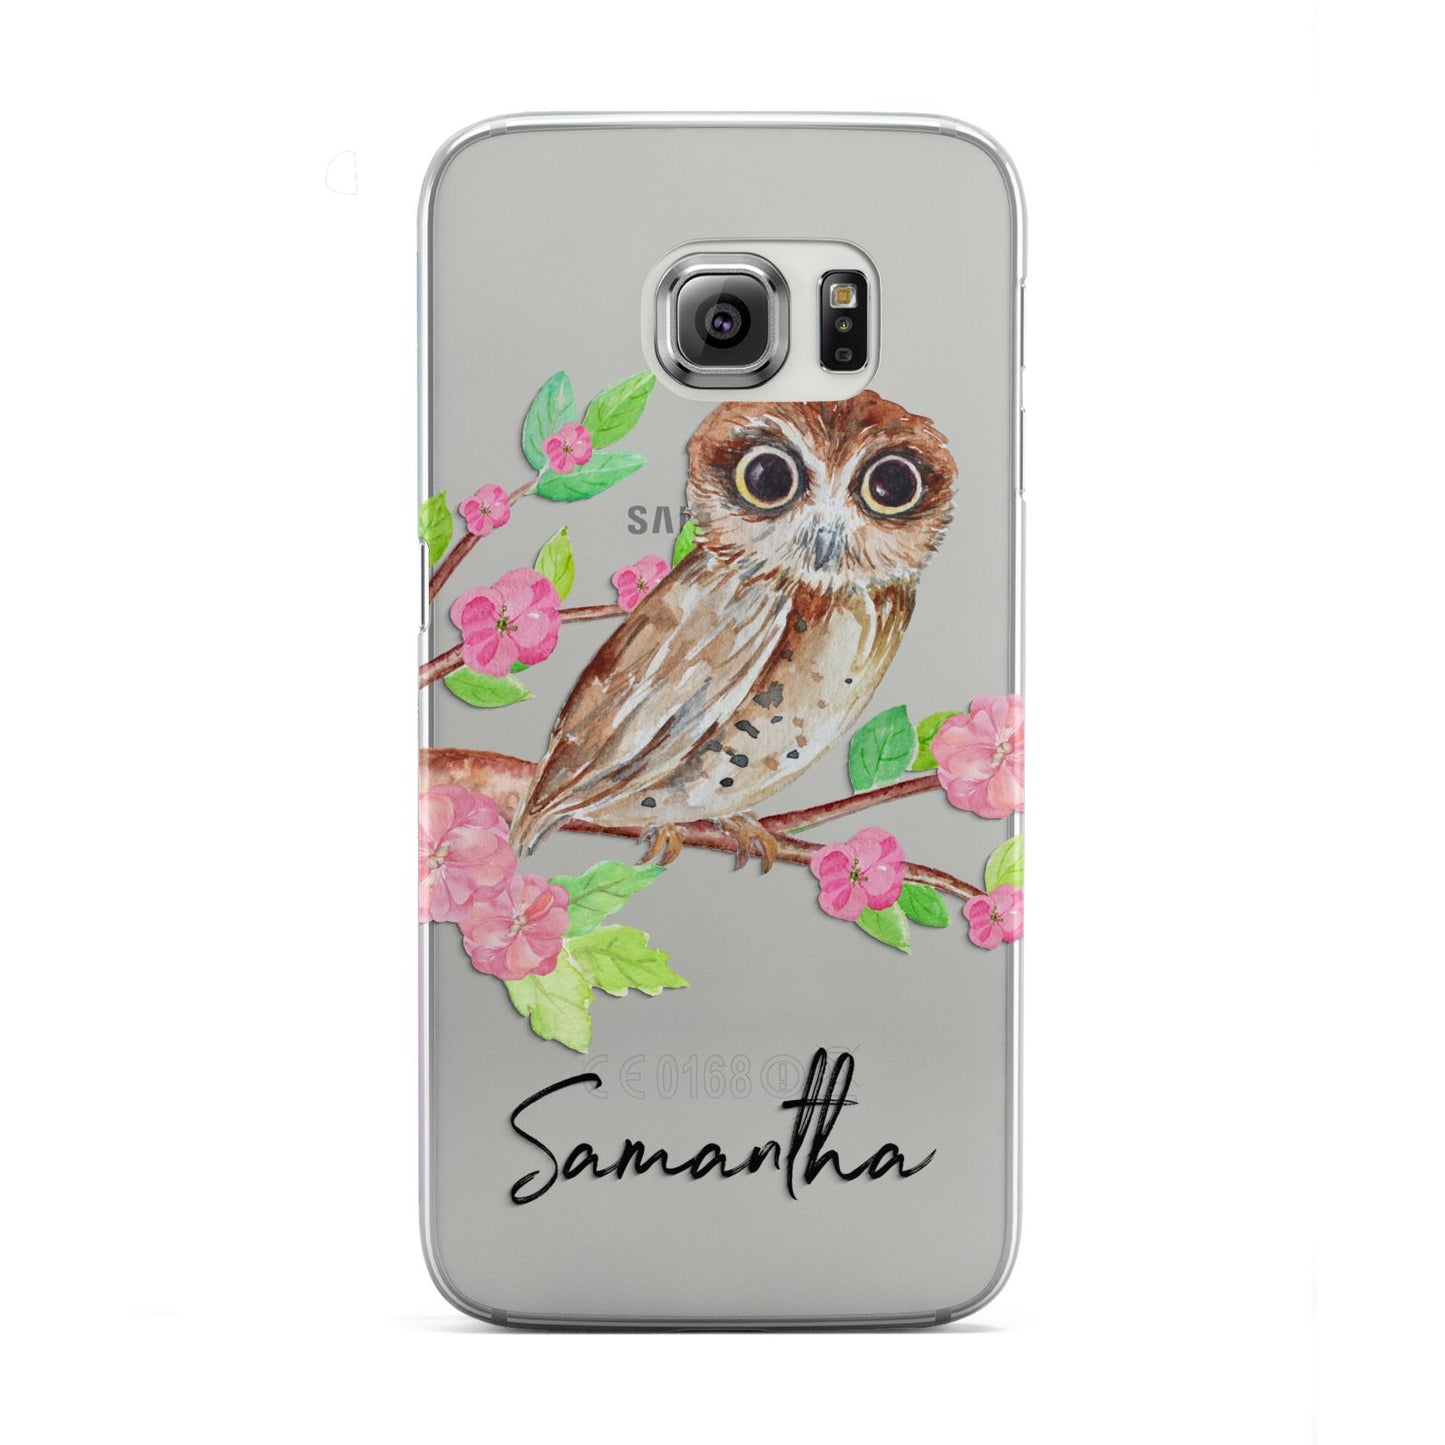 Personalised Owl Samsung Galaxy S6 Edge Case